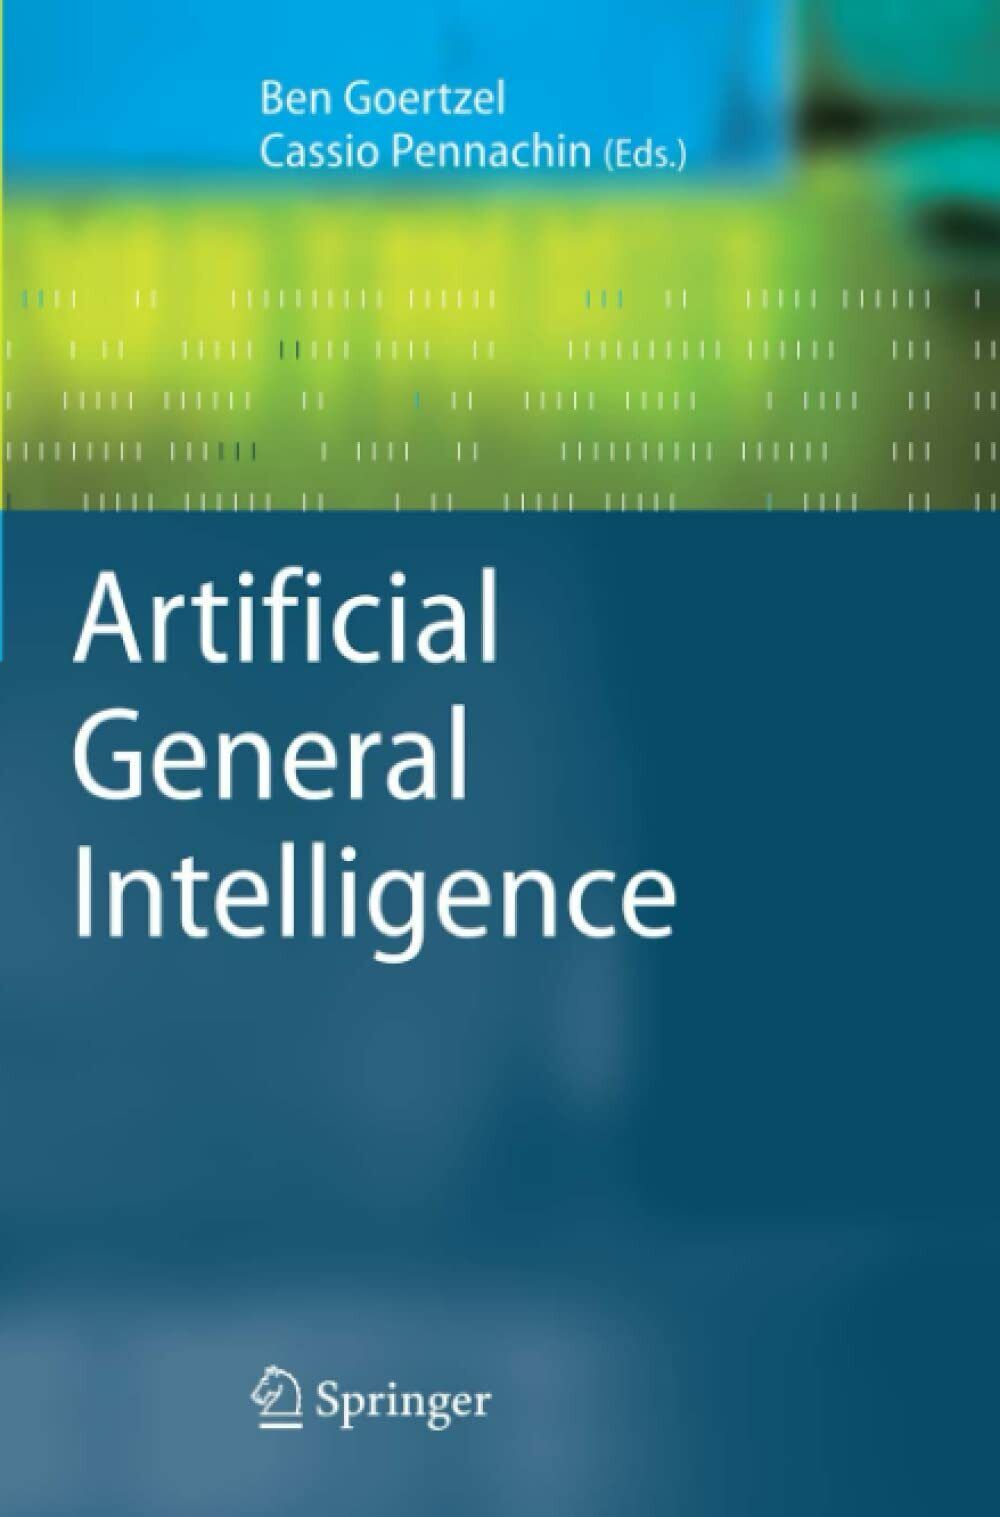 Artificial General Intelligence -  Ben Goertzel, Cassio Pennachin -Springer,2010